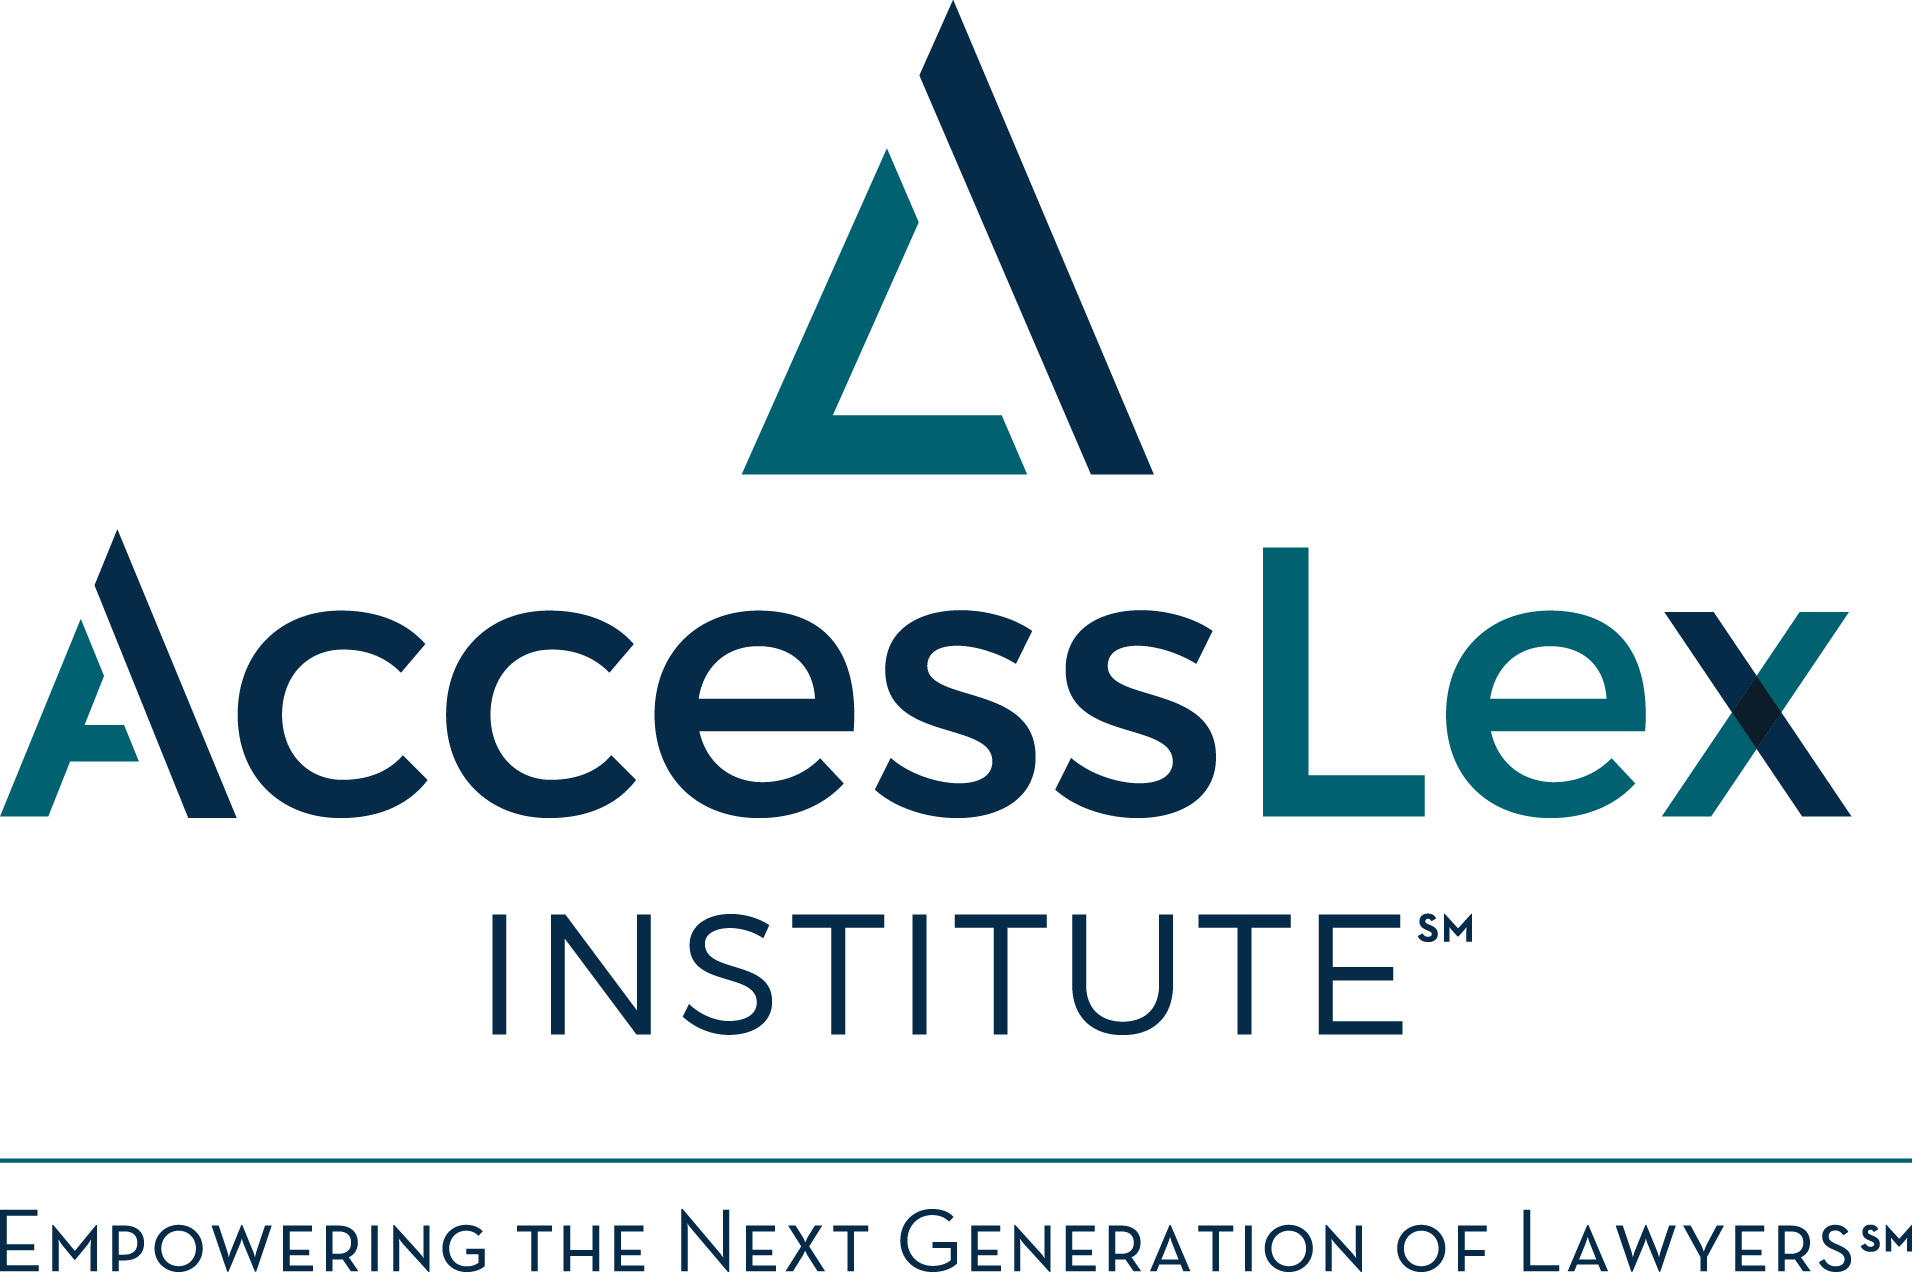 Institute Logo - Guide to Using the AccessLex Institute Name and Logo | AccessLex